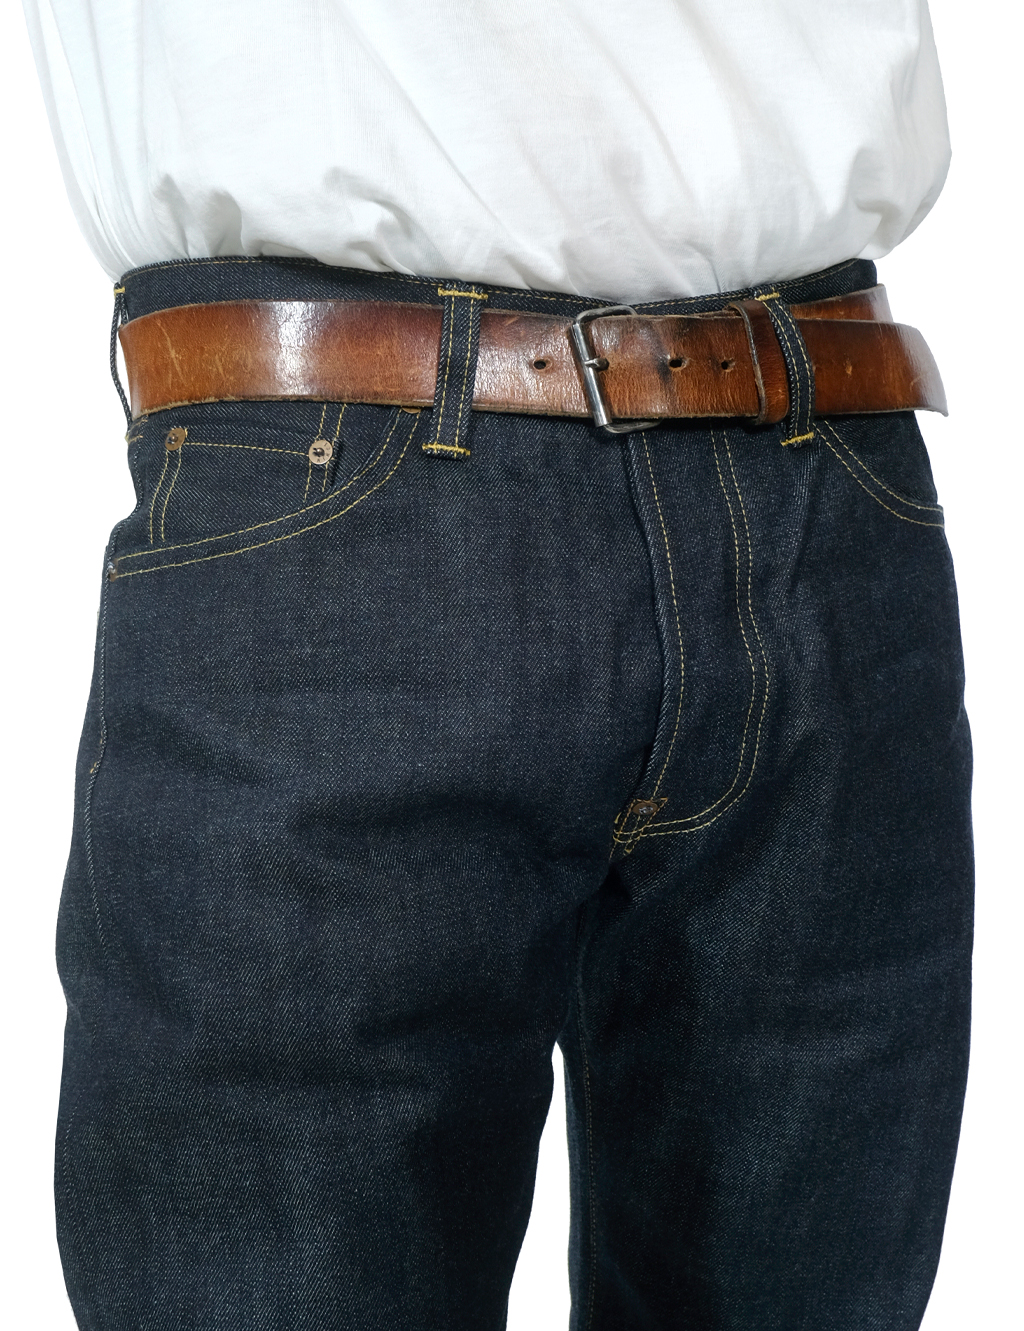 Edwin - Nashville Red Listed Selvage Denim Jeans (Unwashed) - 14oz